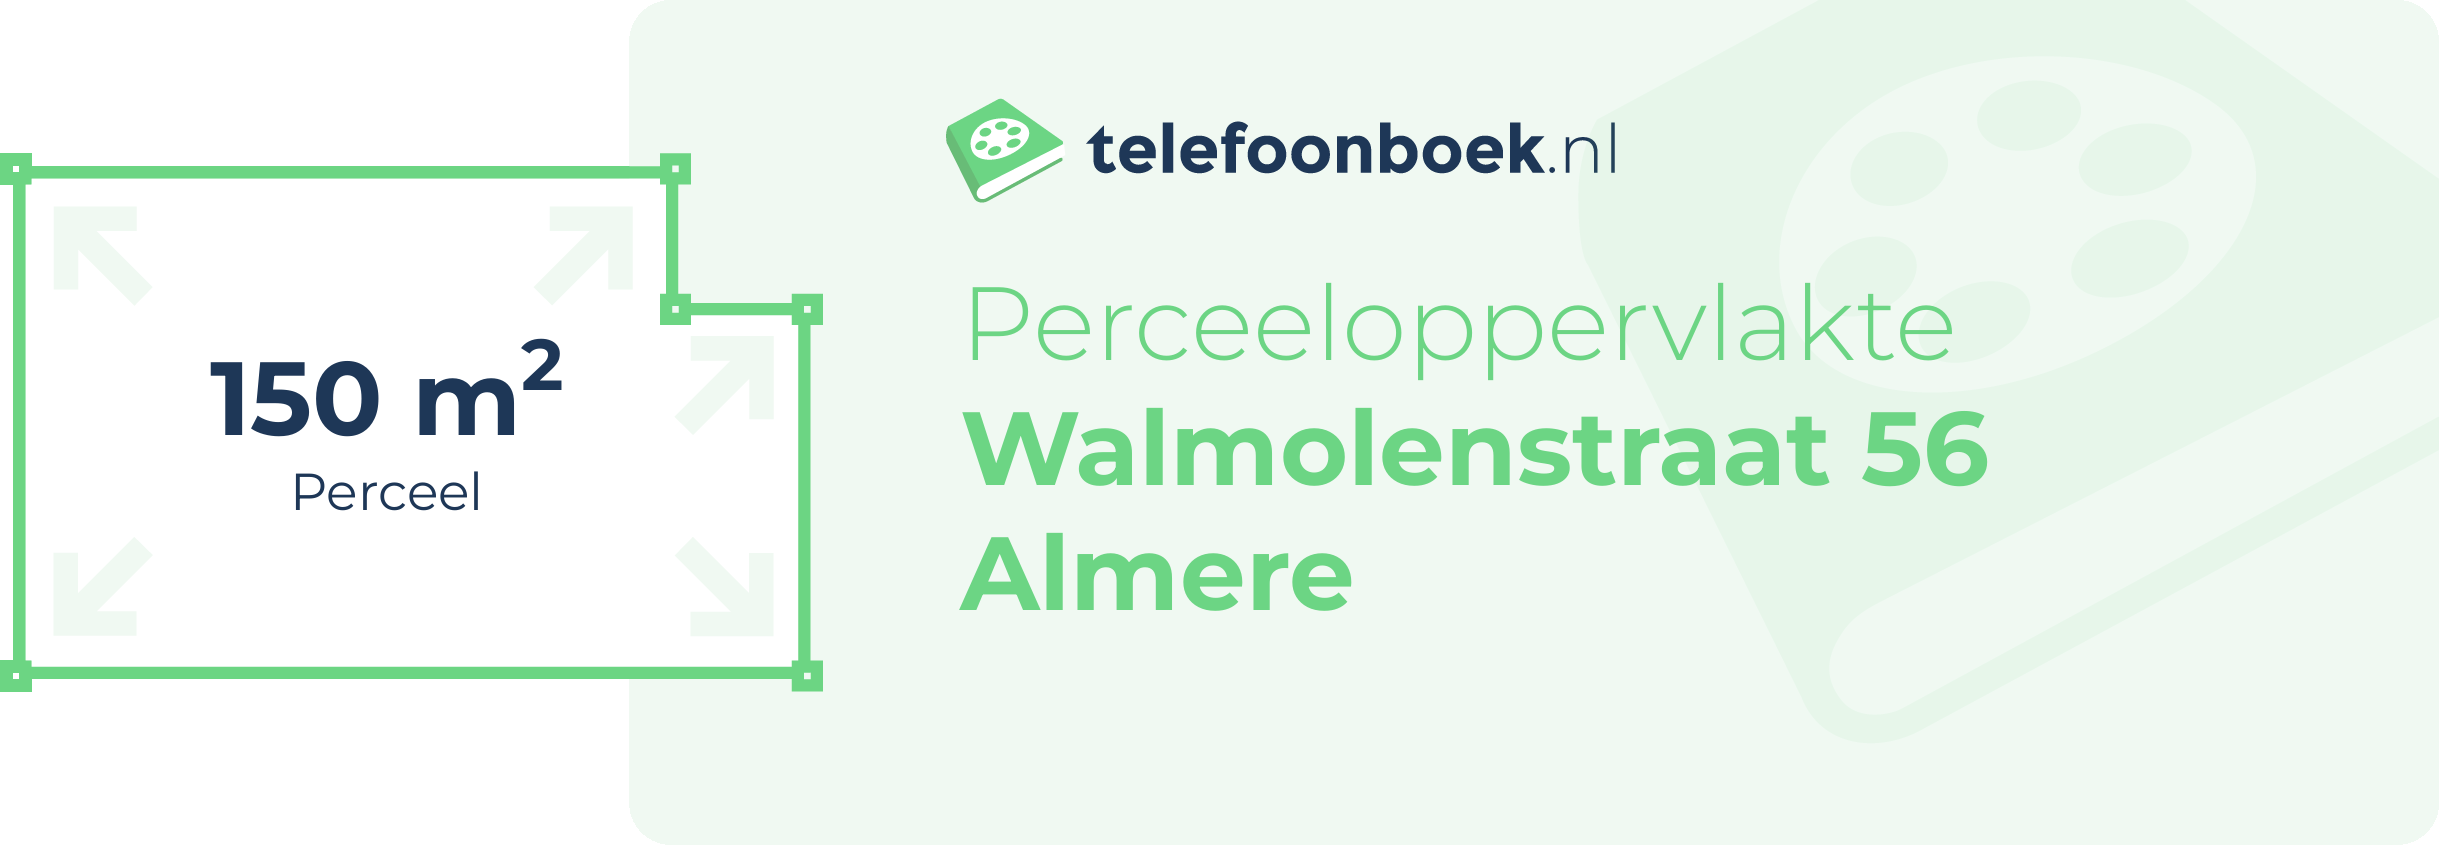 Perceeloppervlakte Walmolenstraat 56 Almere